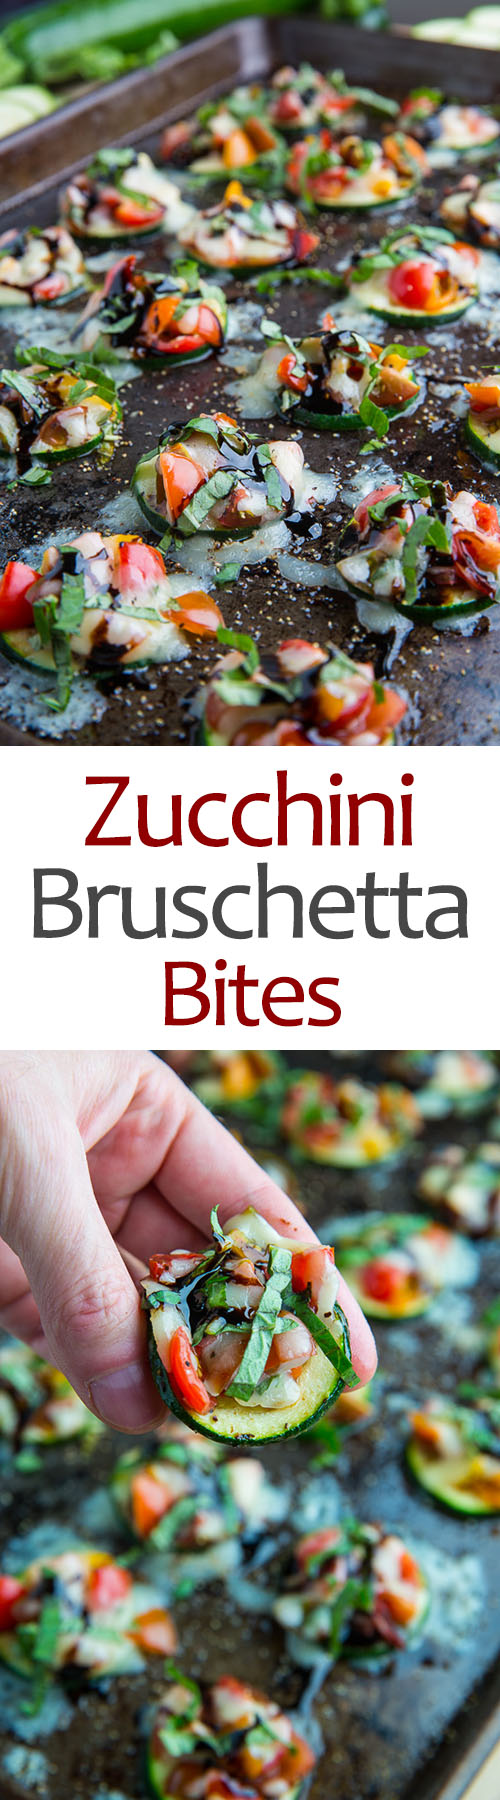 Zucchini Bruschetta Bites